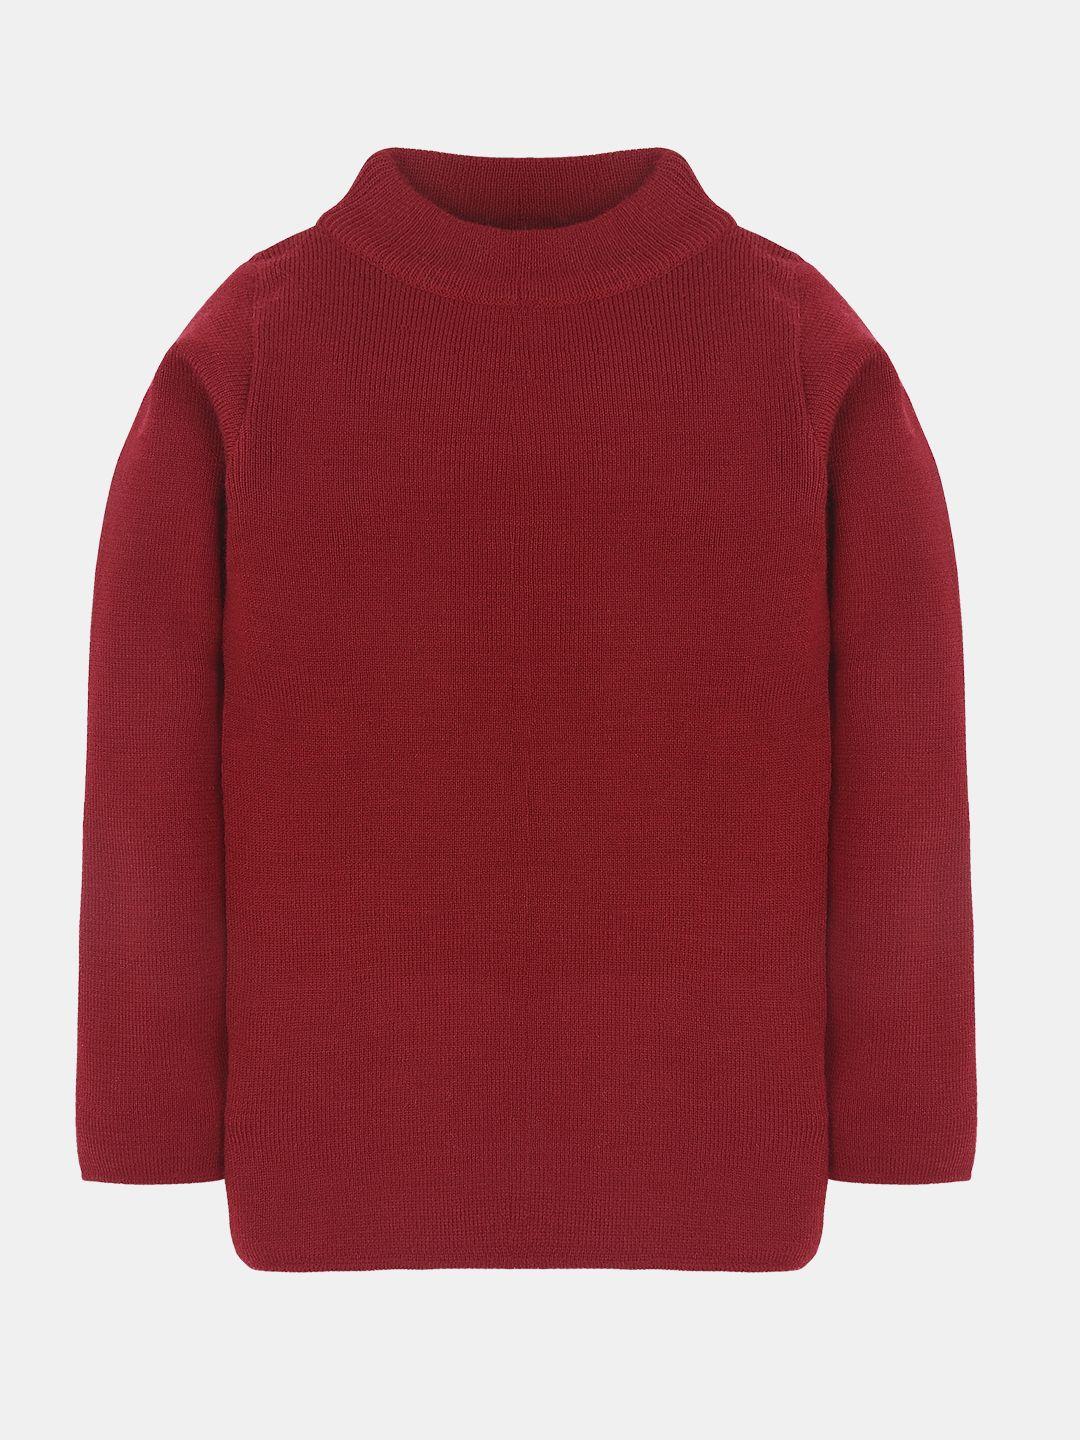 rvk unisex maroon solid sweater